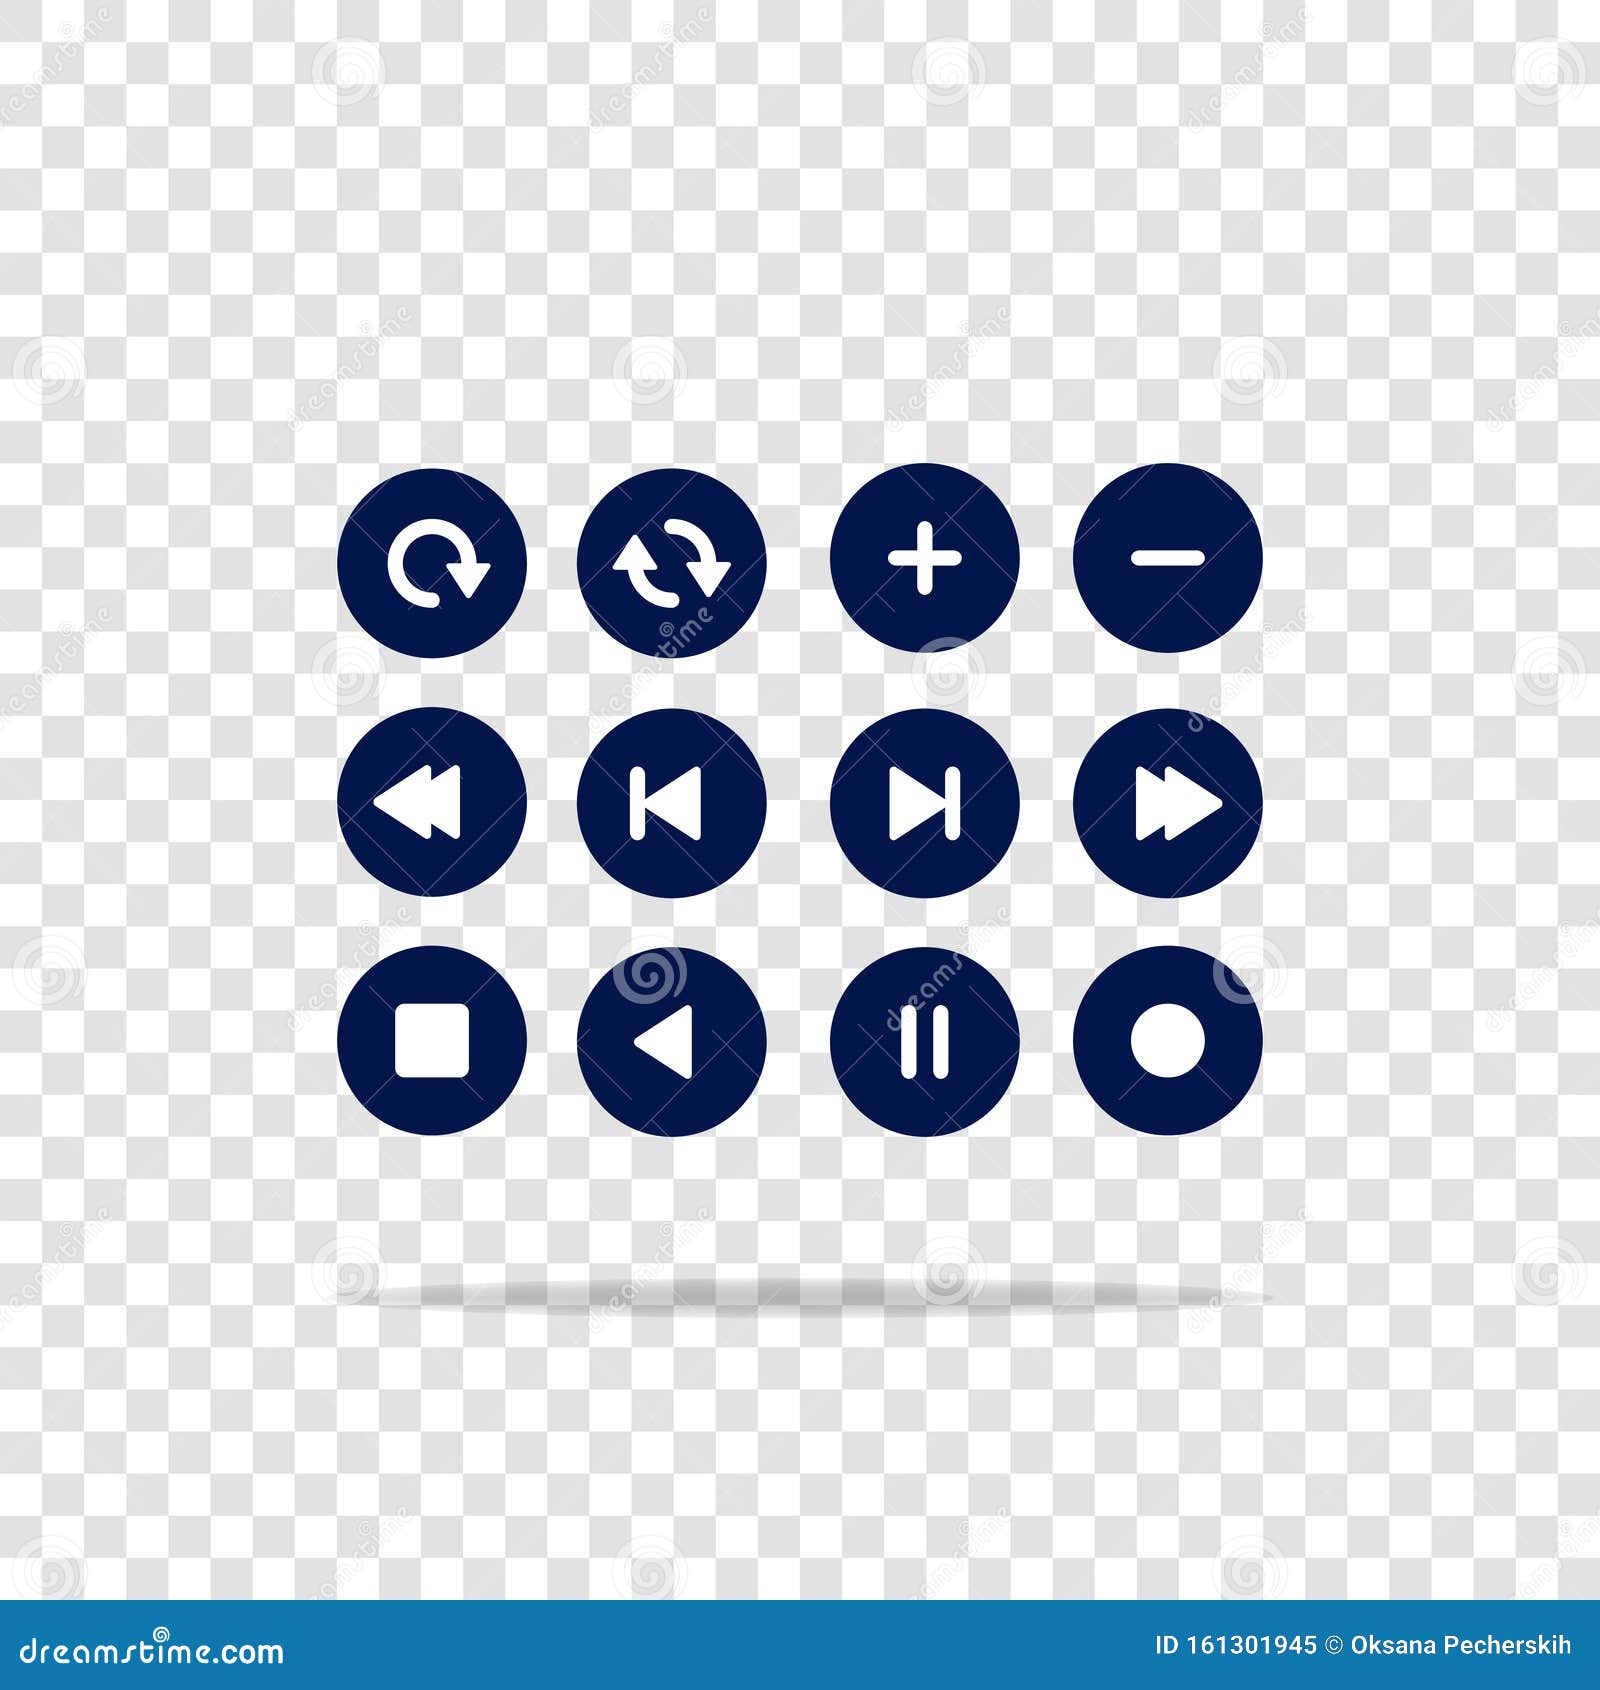 navigation button icons